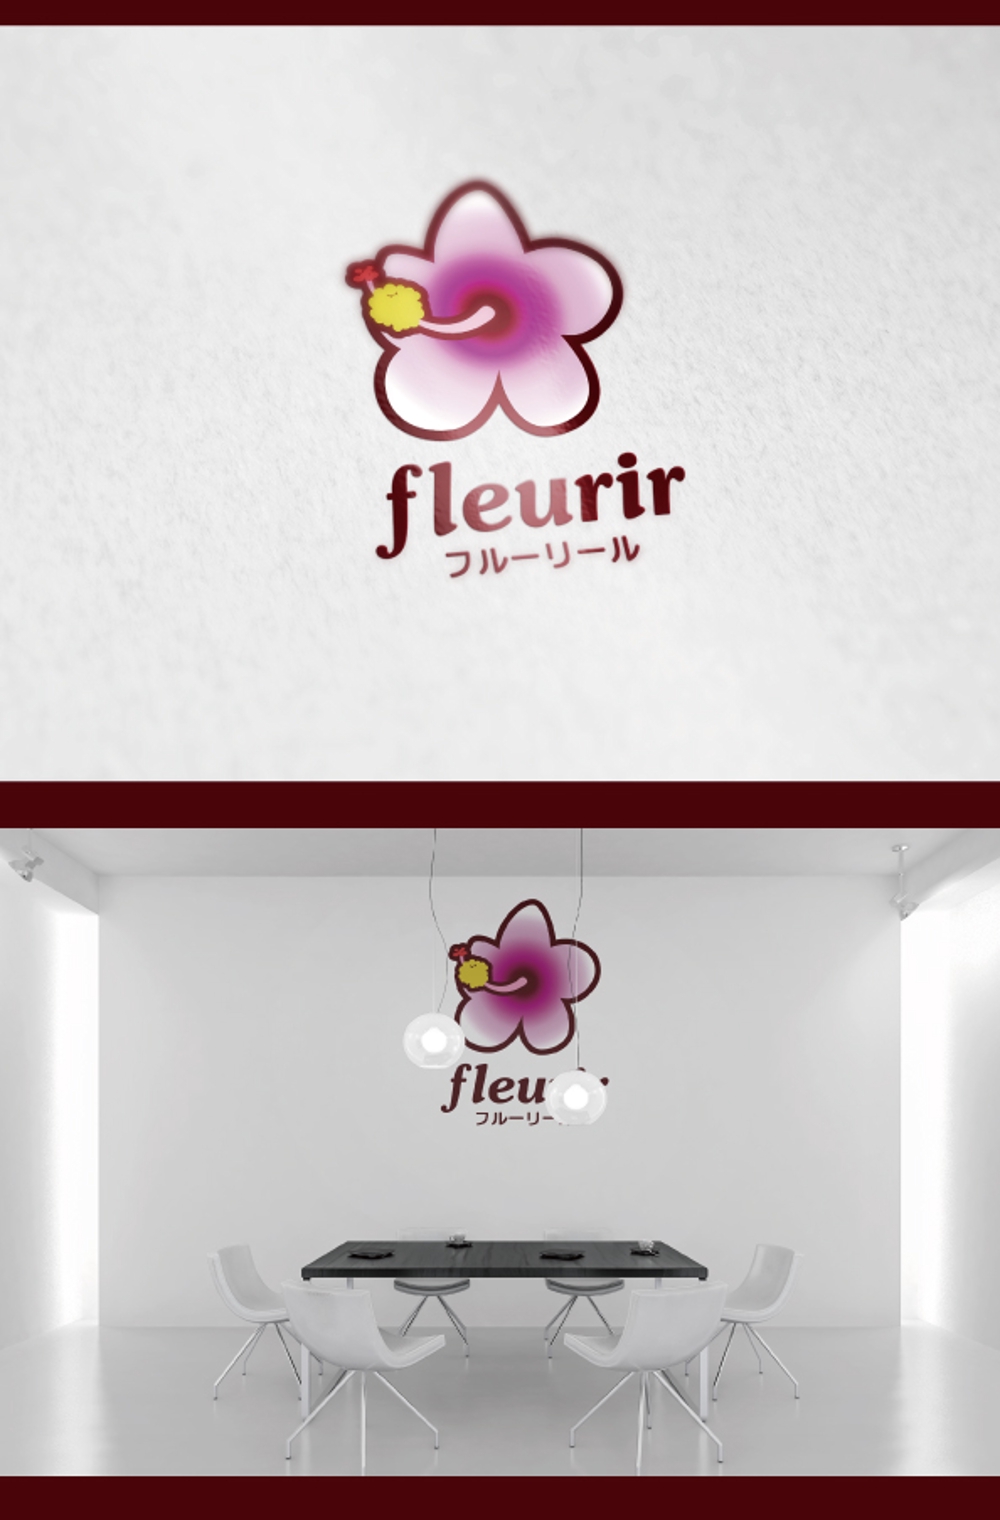 fleurirさま５.jpg